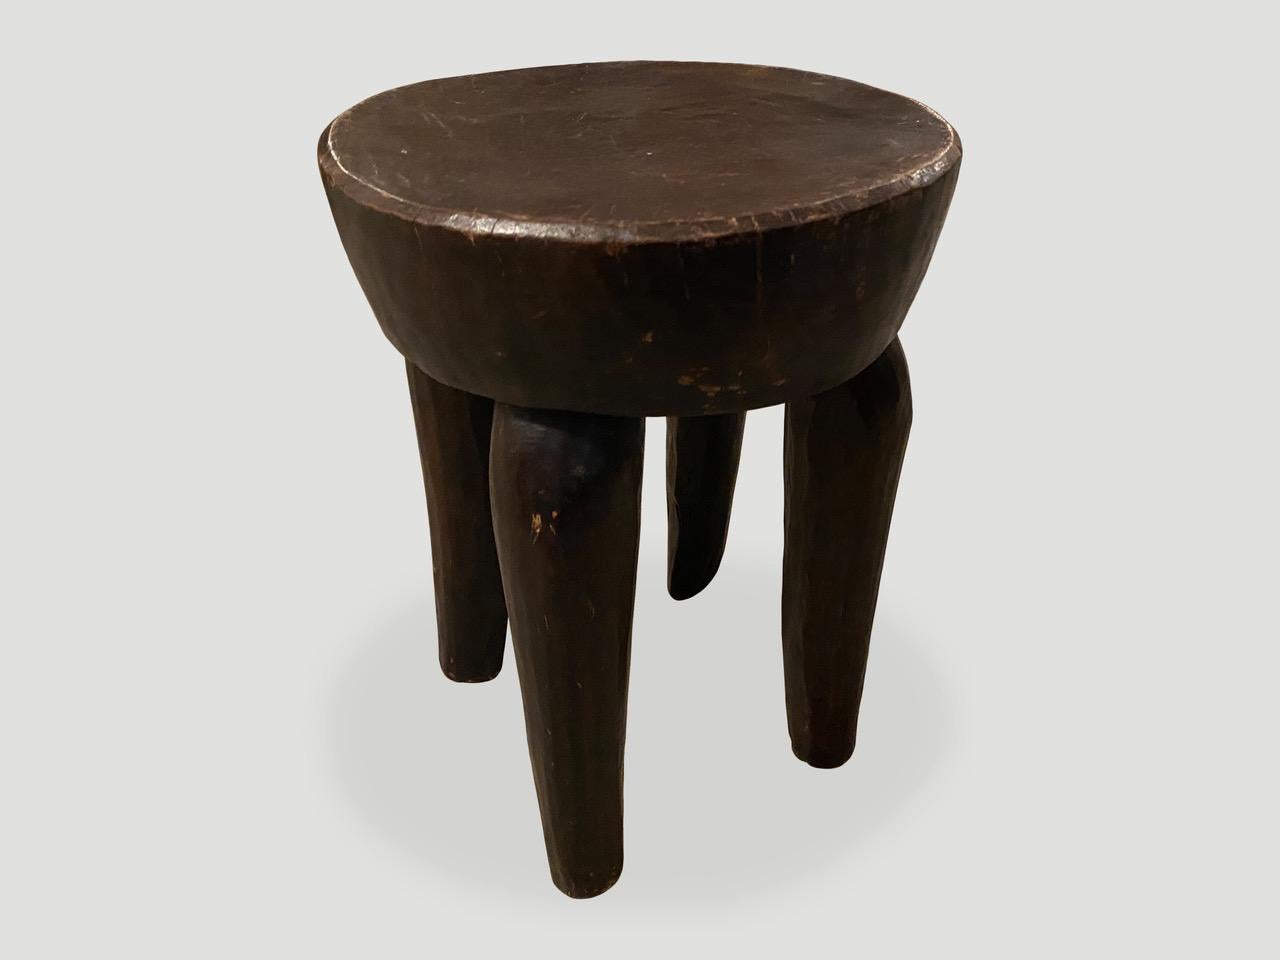 Ivorian Andrianna Shamaris African Mahogany Wood Side Table or Stool